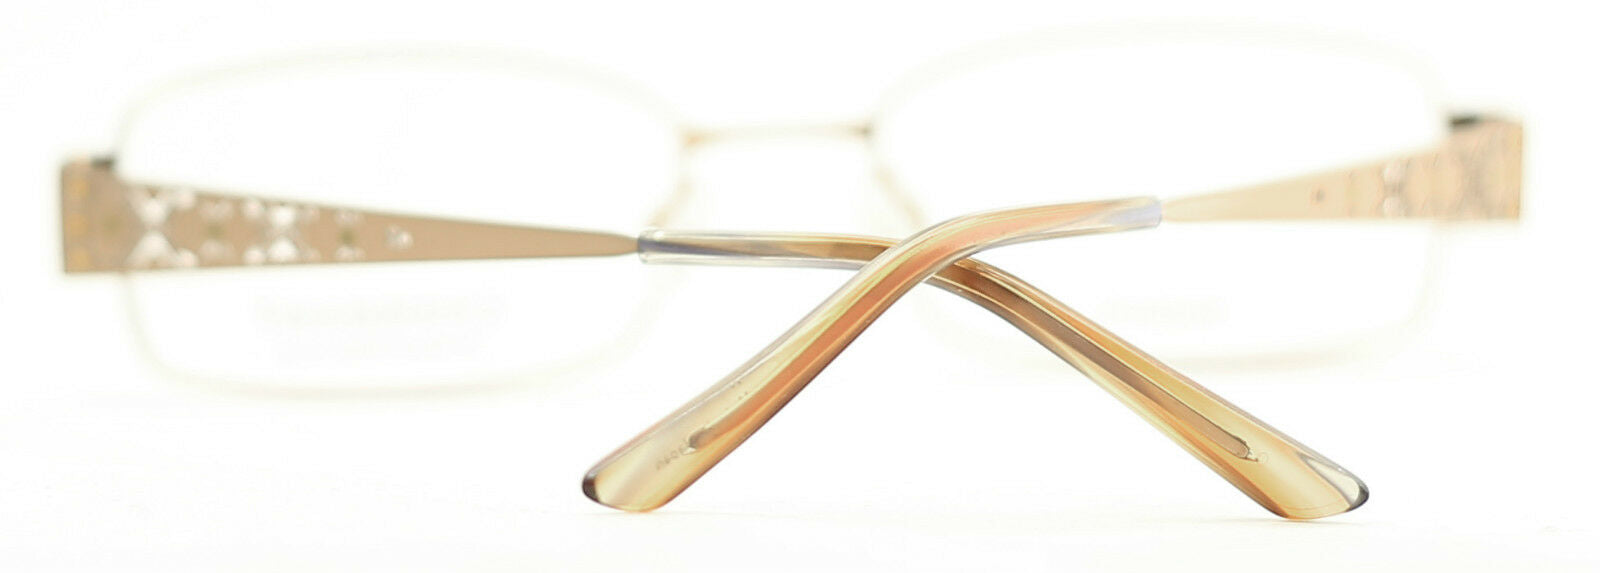 CHARMANT CH10824 OR Titanium Eyewear FRAMES RX Optical Eyeglasses Glasses - New